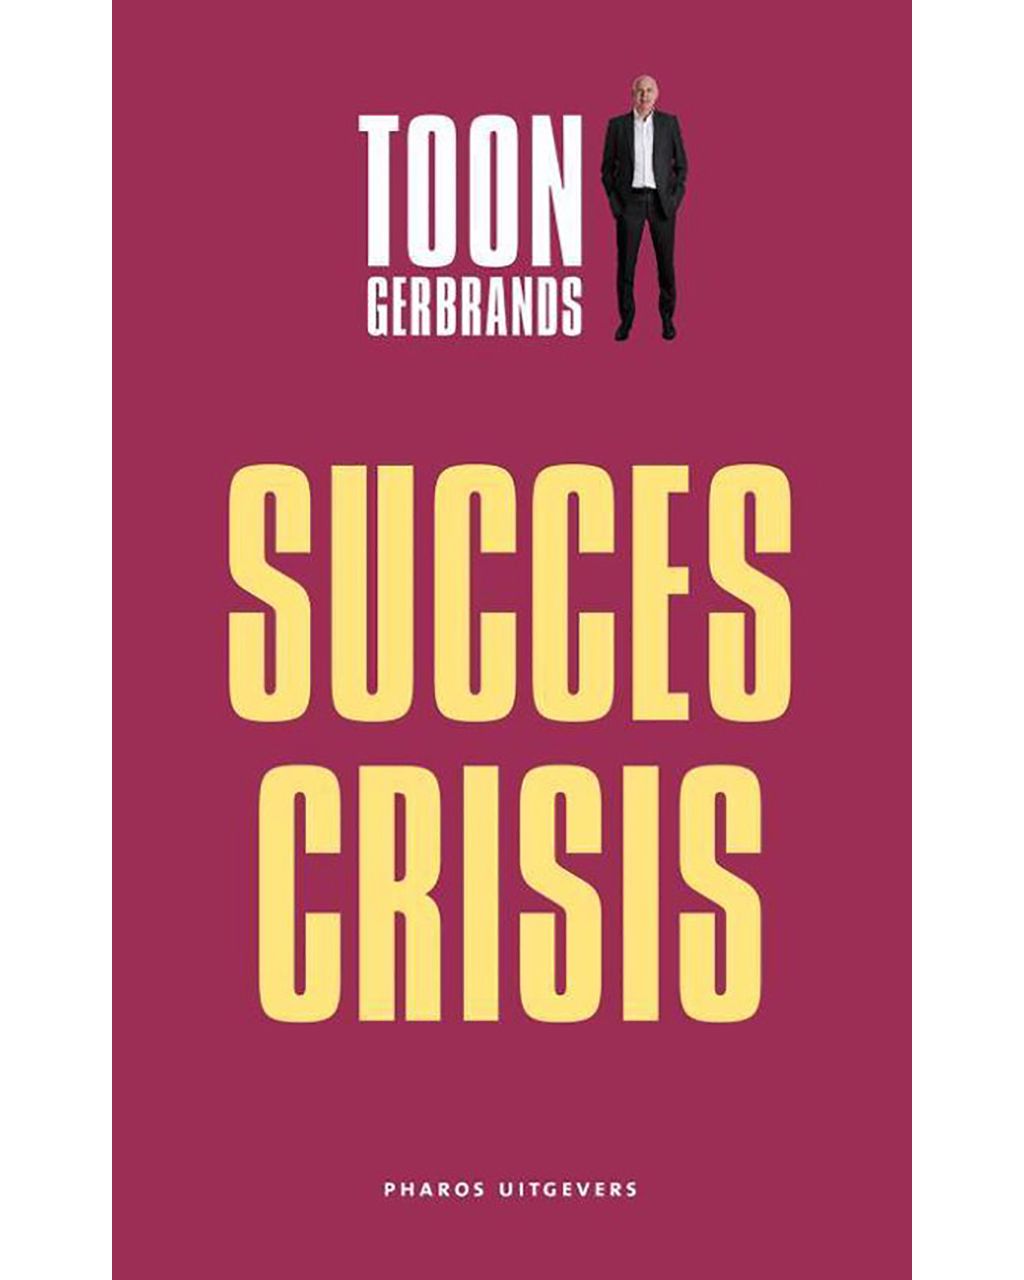 De succescrisis - Toon Gerbrands  NVT 064543-001-0